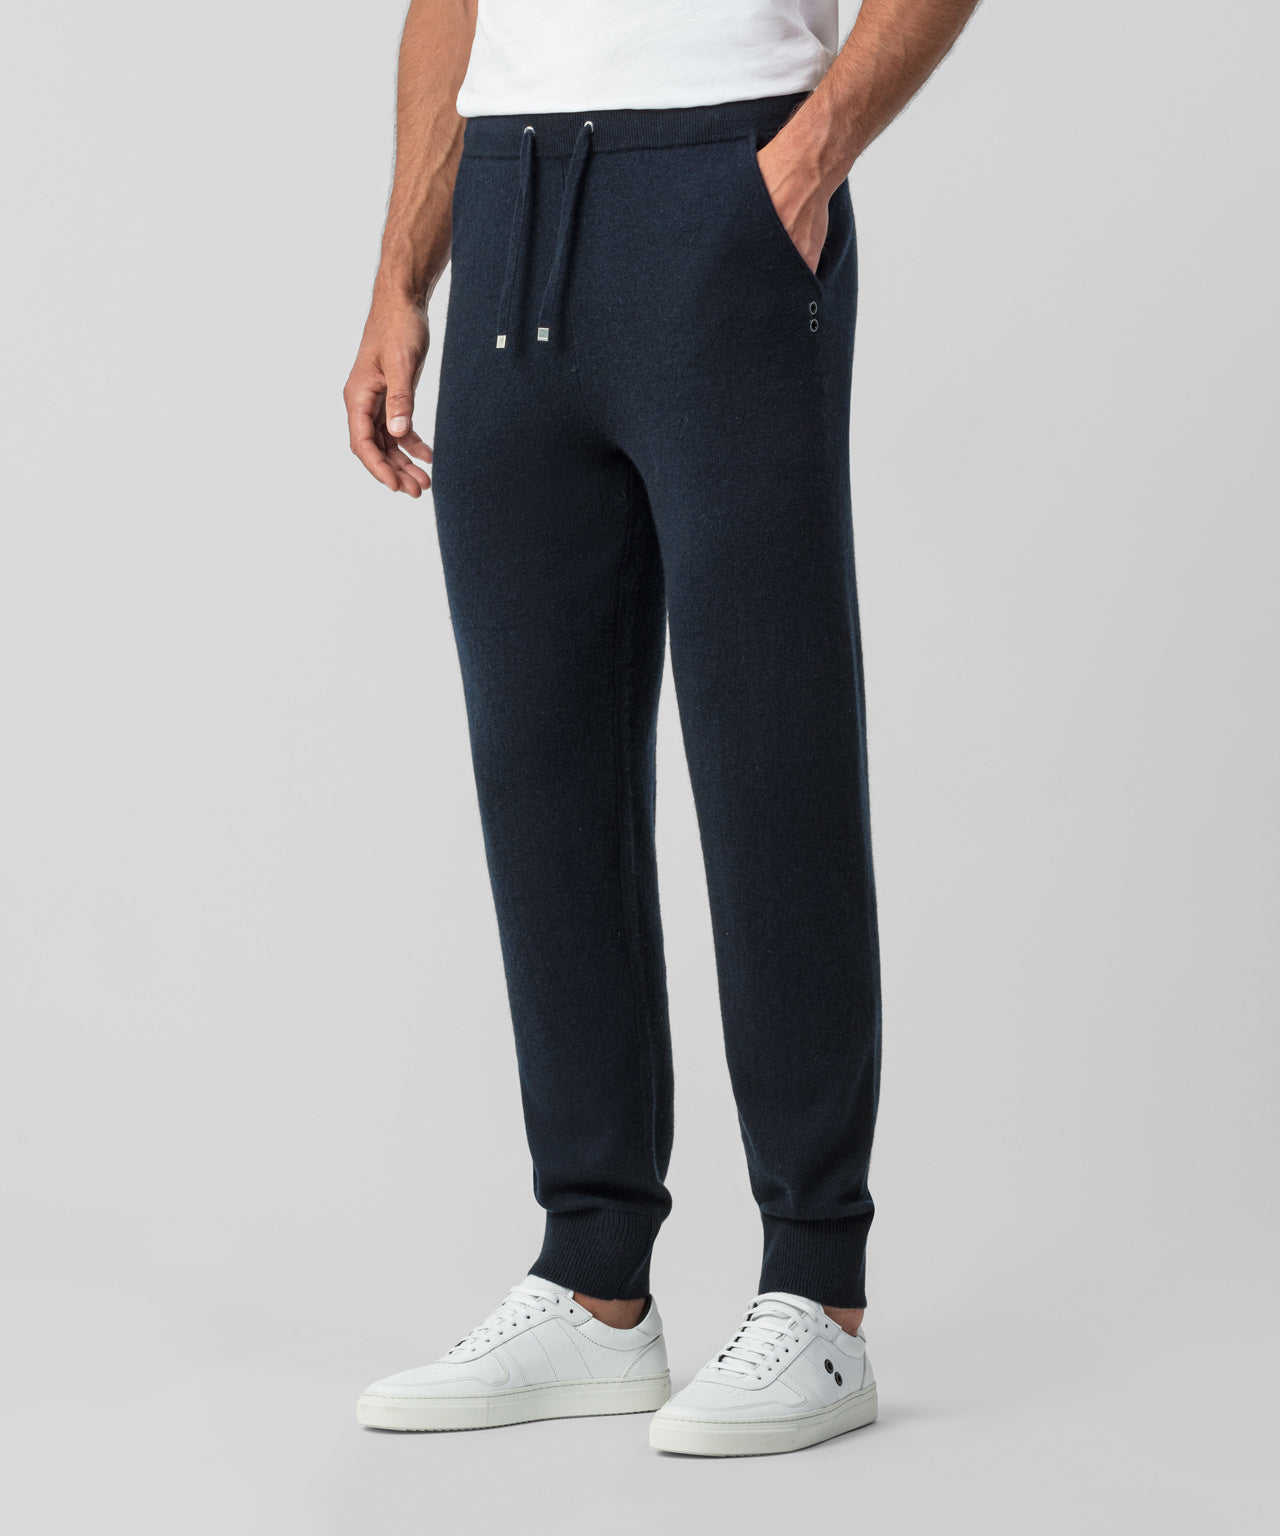 Pantalon avec poches en cachemire: Bleu marine